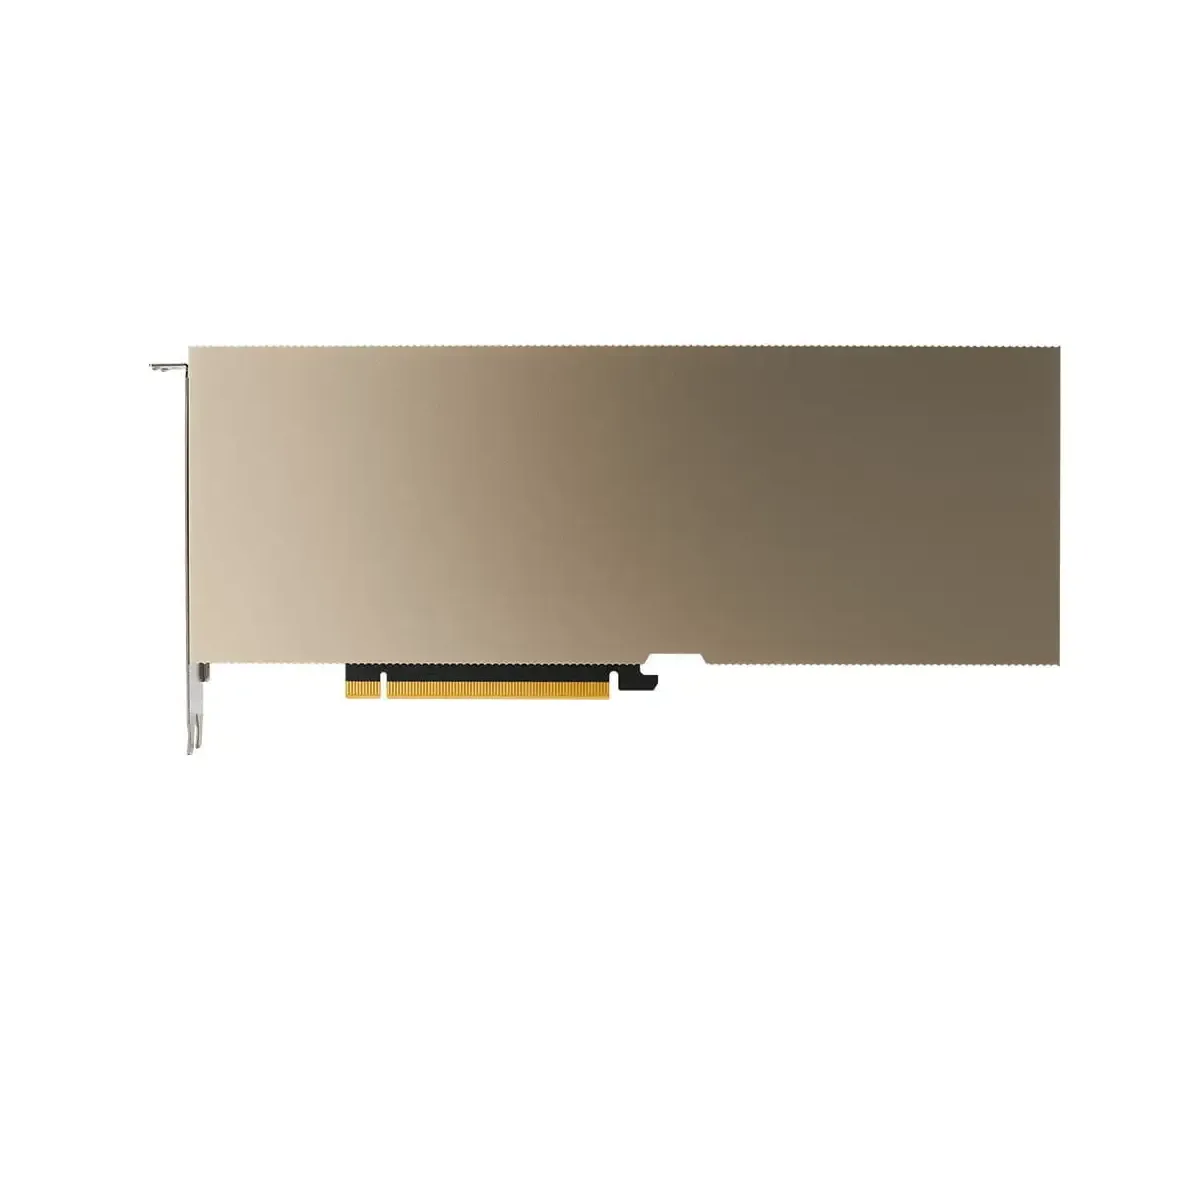 Dell Nvidia A16 - 64GB GDDR6 FH PCIe-x16 GPU Accelerator